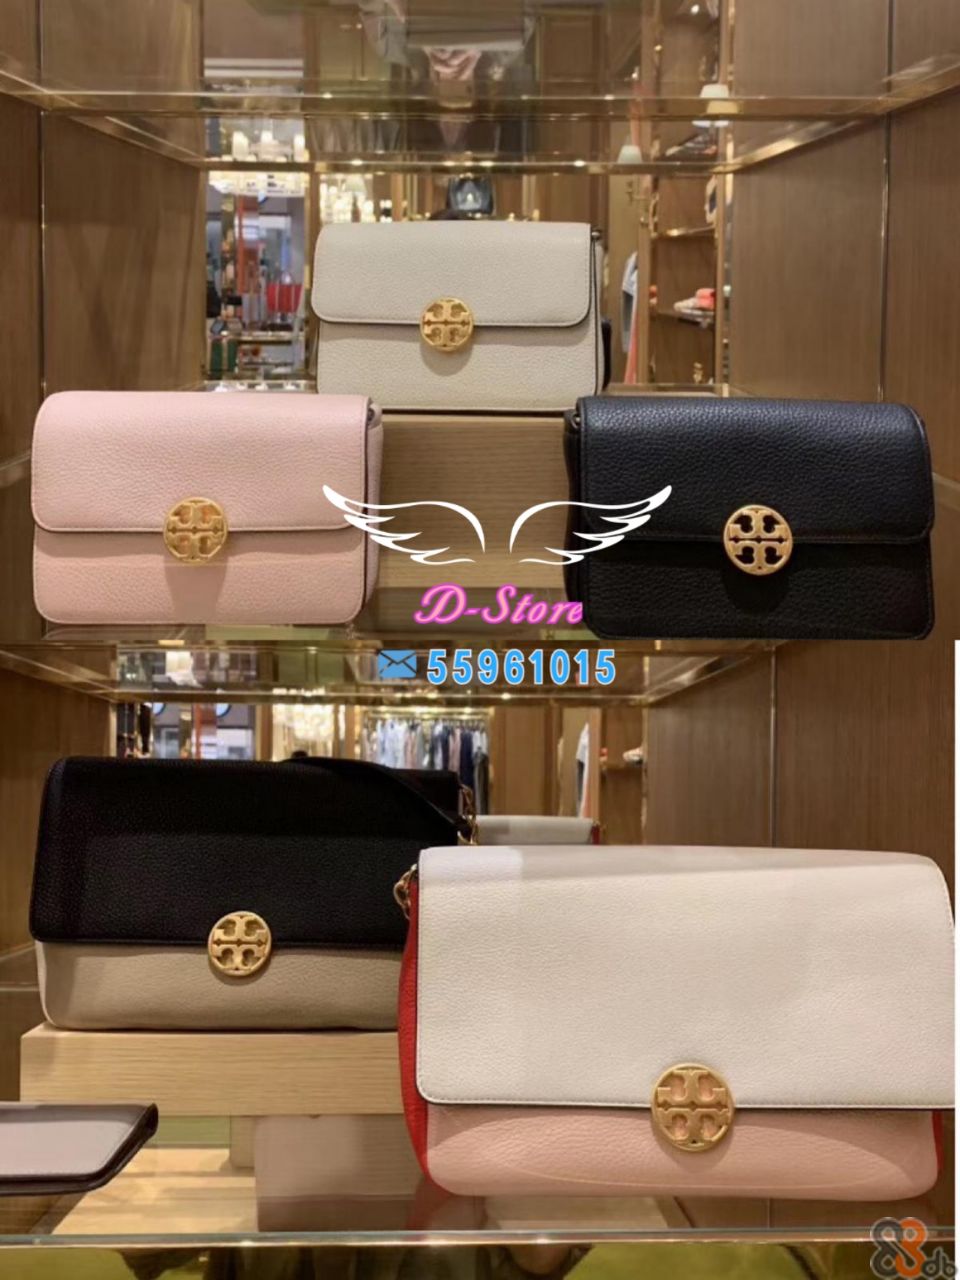 D-Store 55961015  Pink,Bag,Fashion accessory,Handbag,Wallet